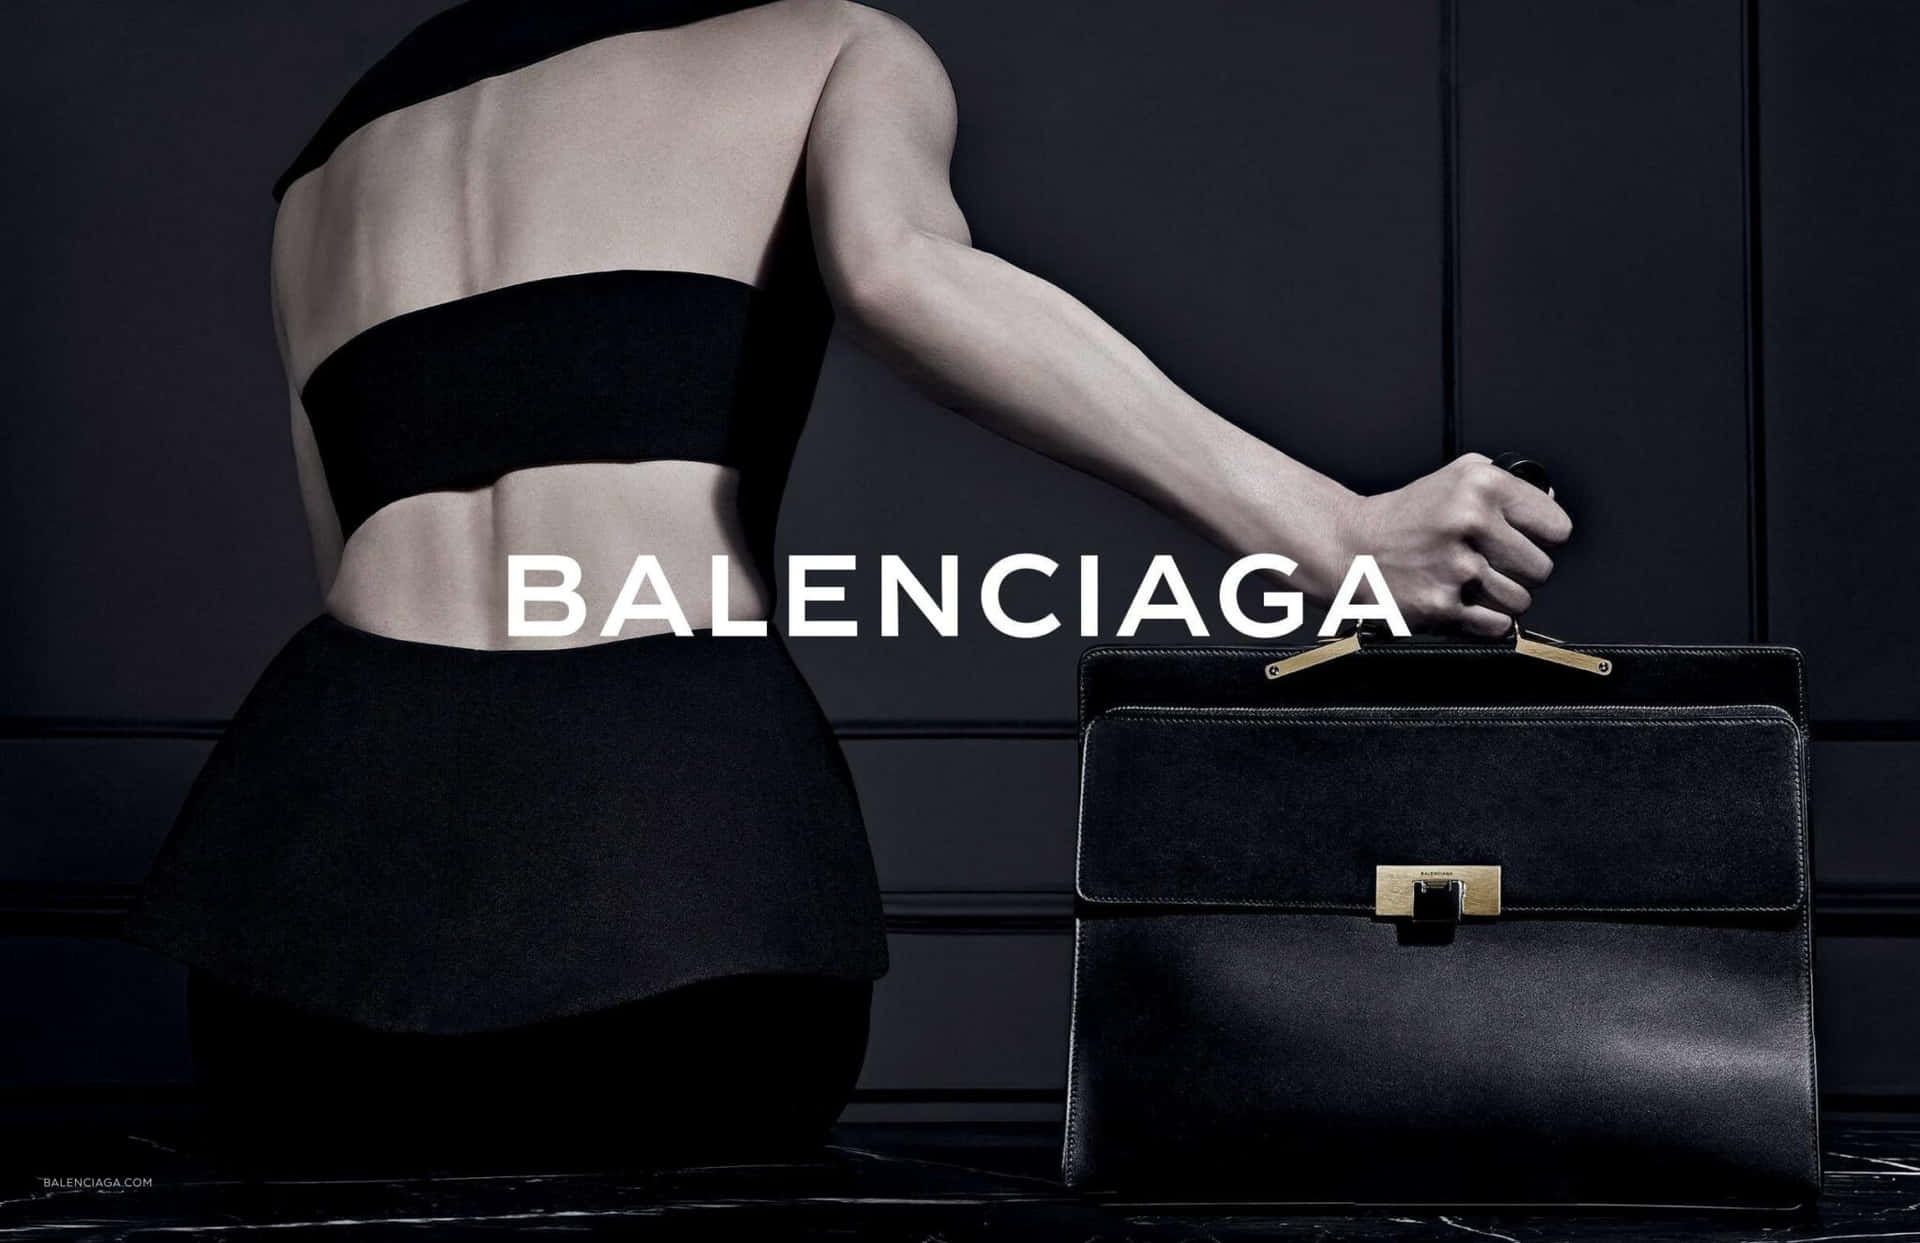 “A bold step in fashion with Balenciaga”